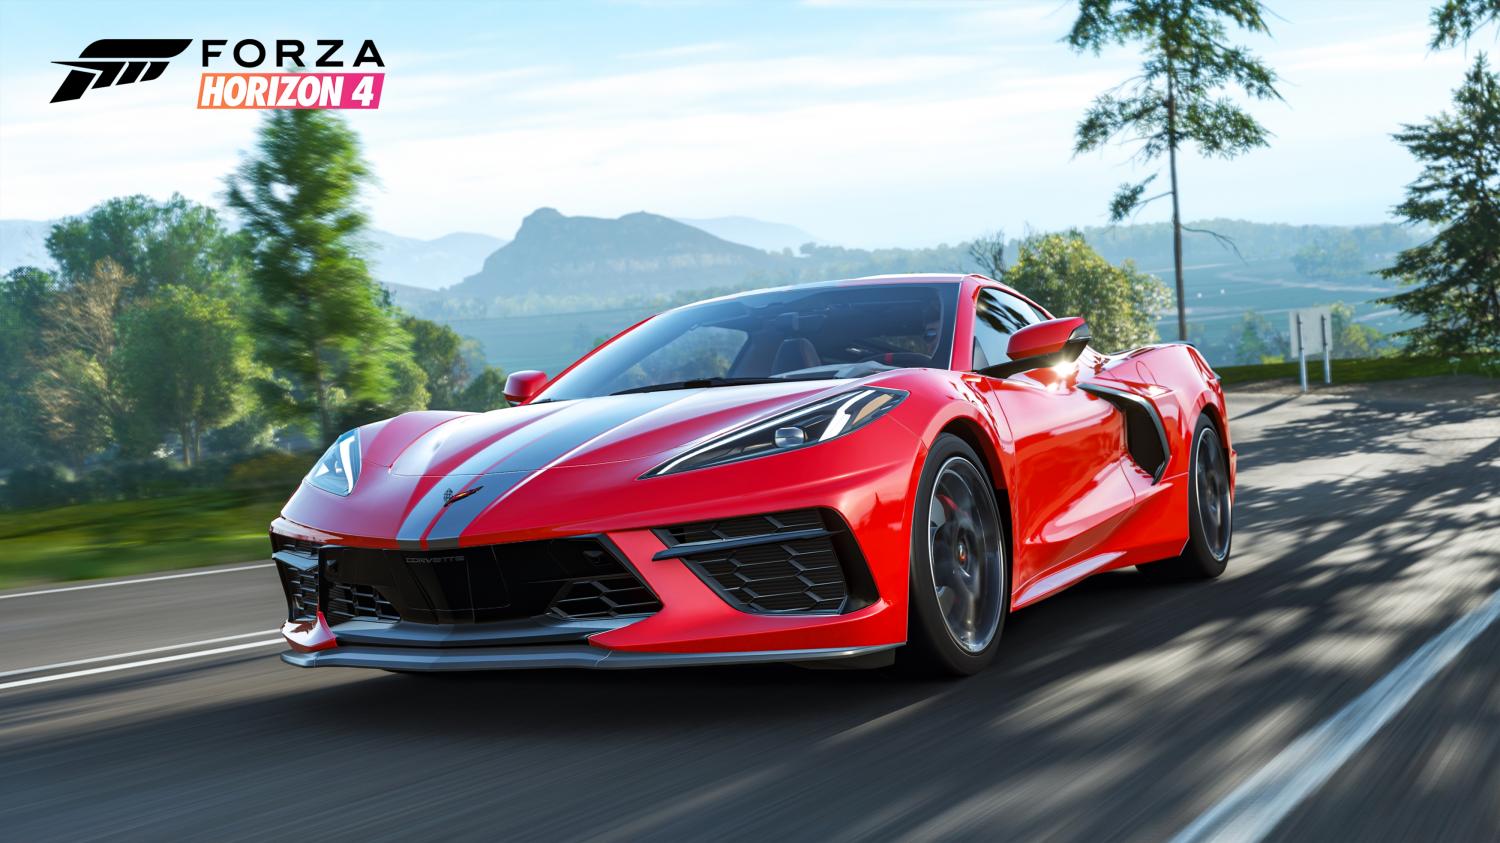 The C8 Chervolet Corvette Is Coming To Forza Horizon 4